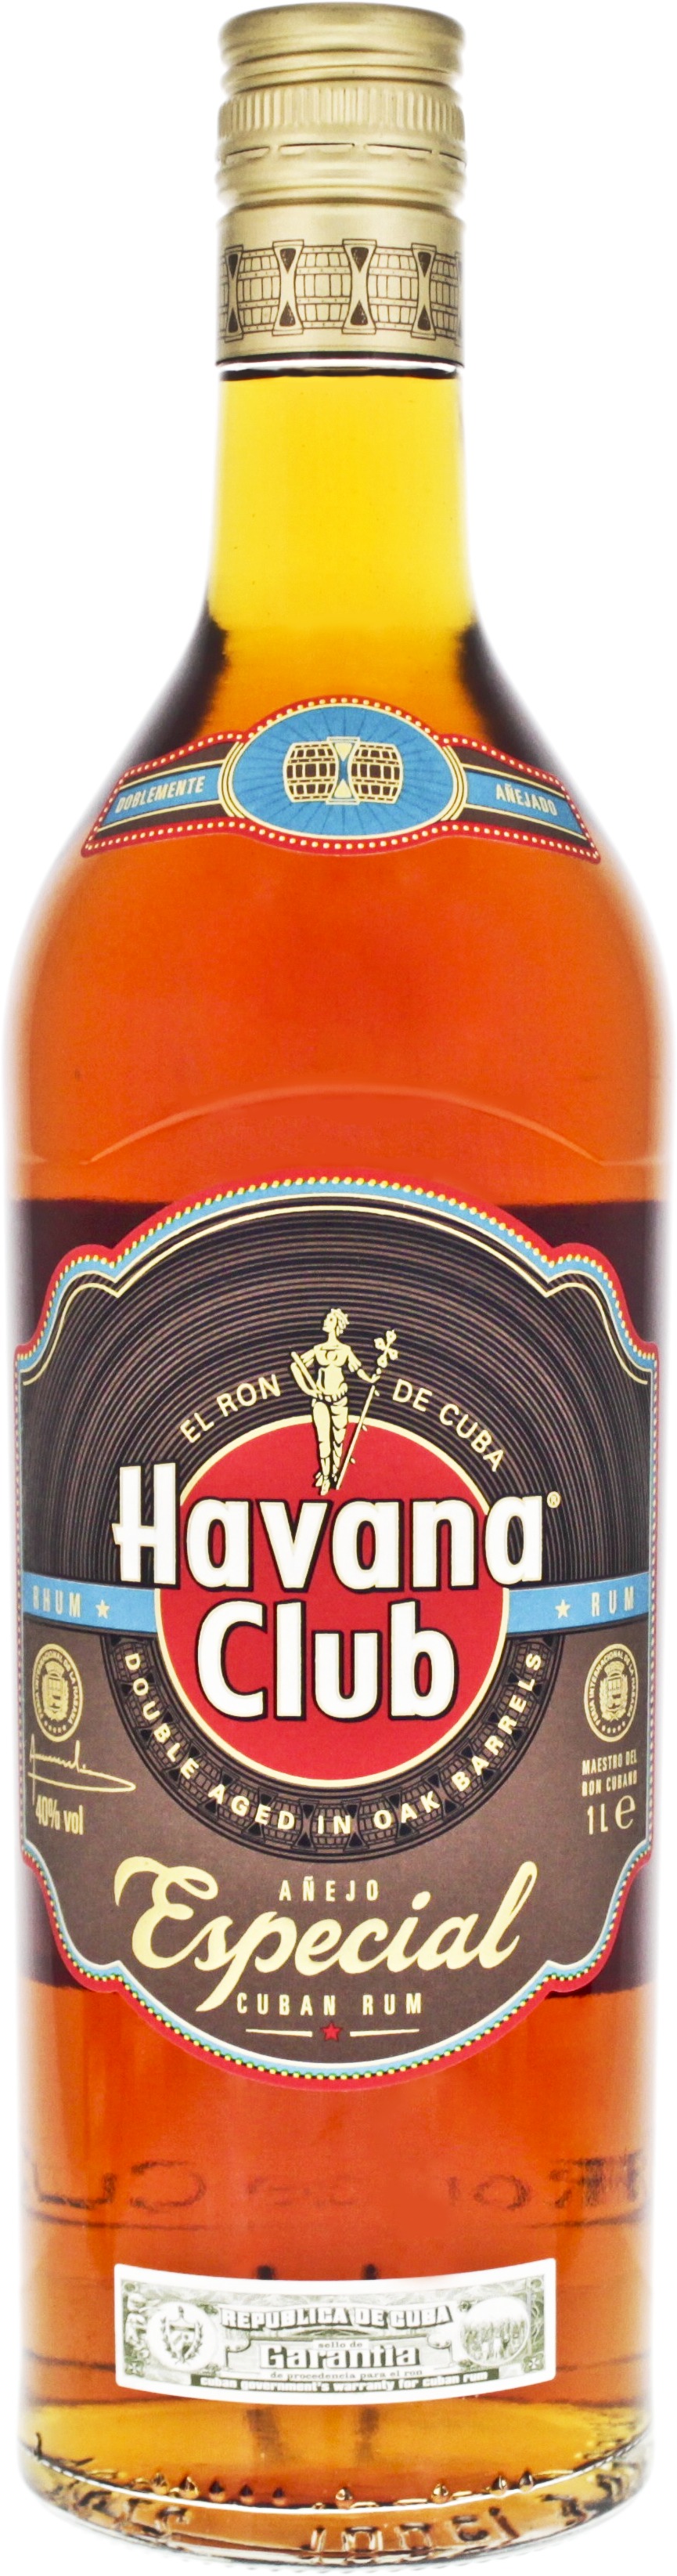 Cuban 1L bordershop Havana 40% in Chop at Tysa duty-free Club Especial Anejo Rum